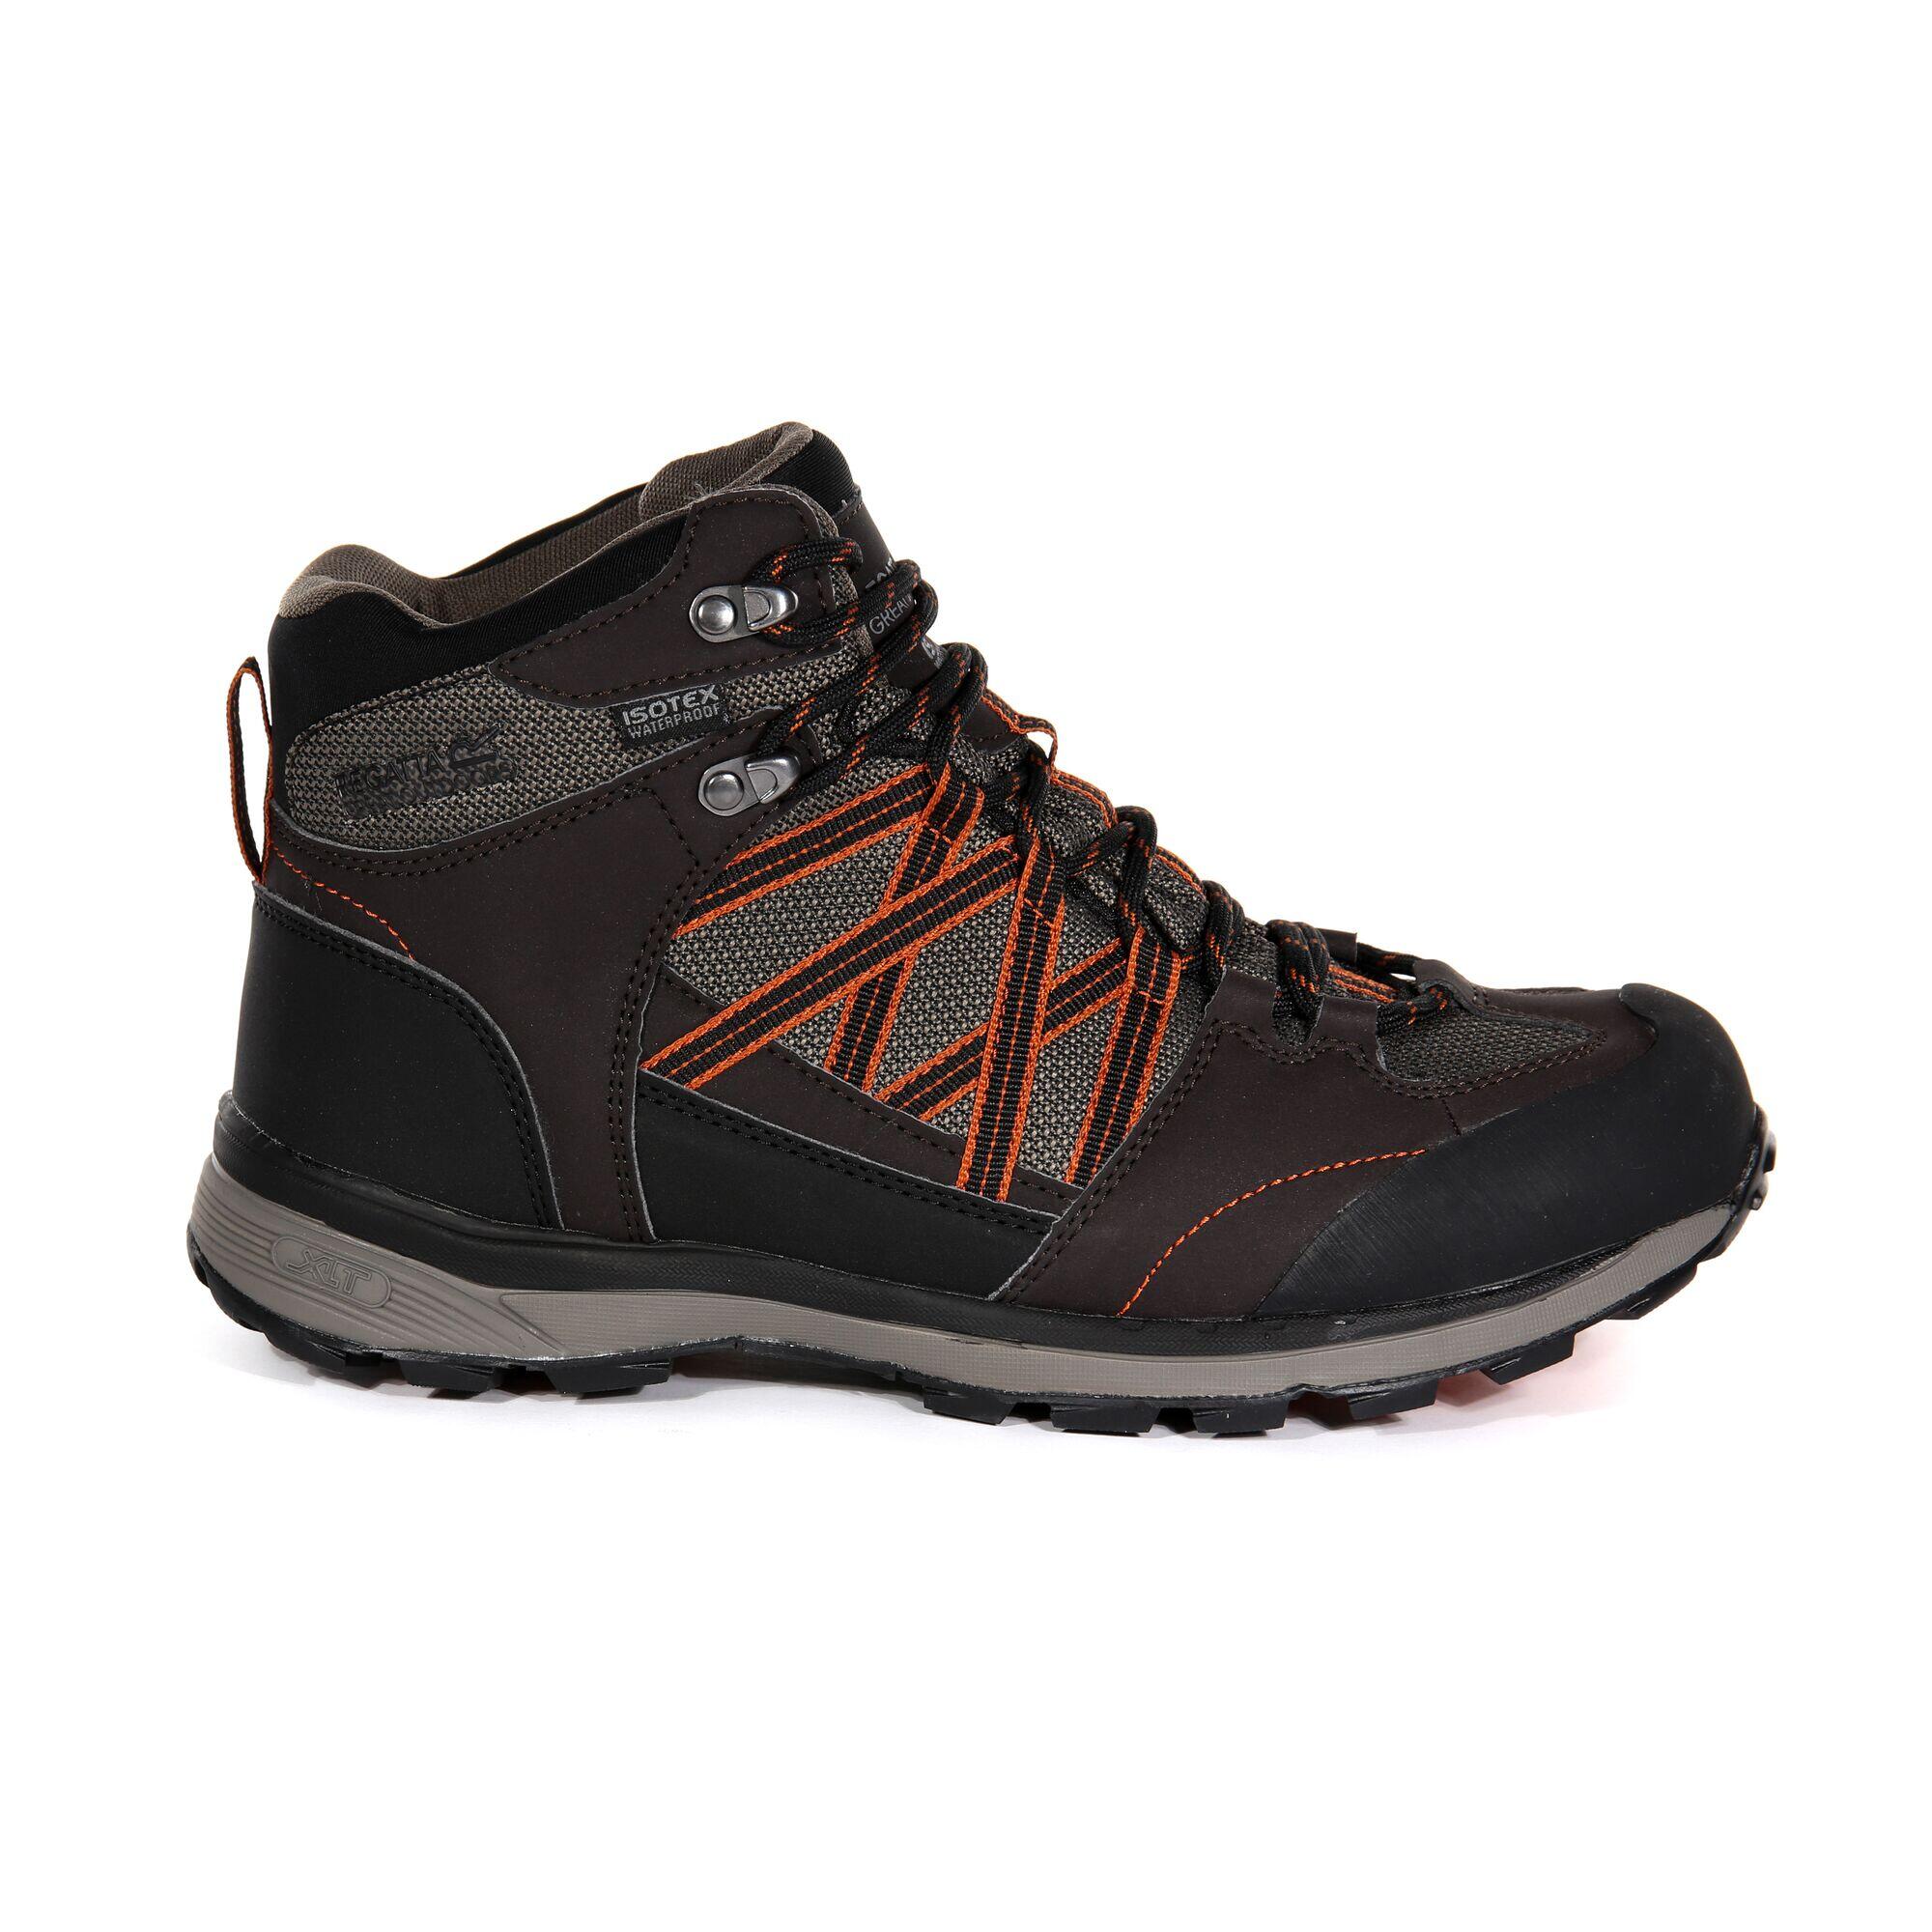 Samaris II Men's Hiking Boots - Dark Brown/Gold 2/6